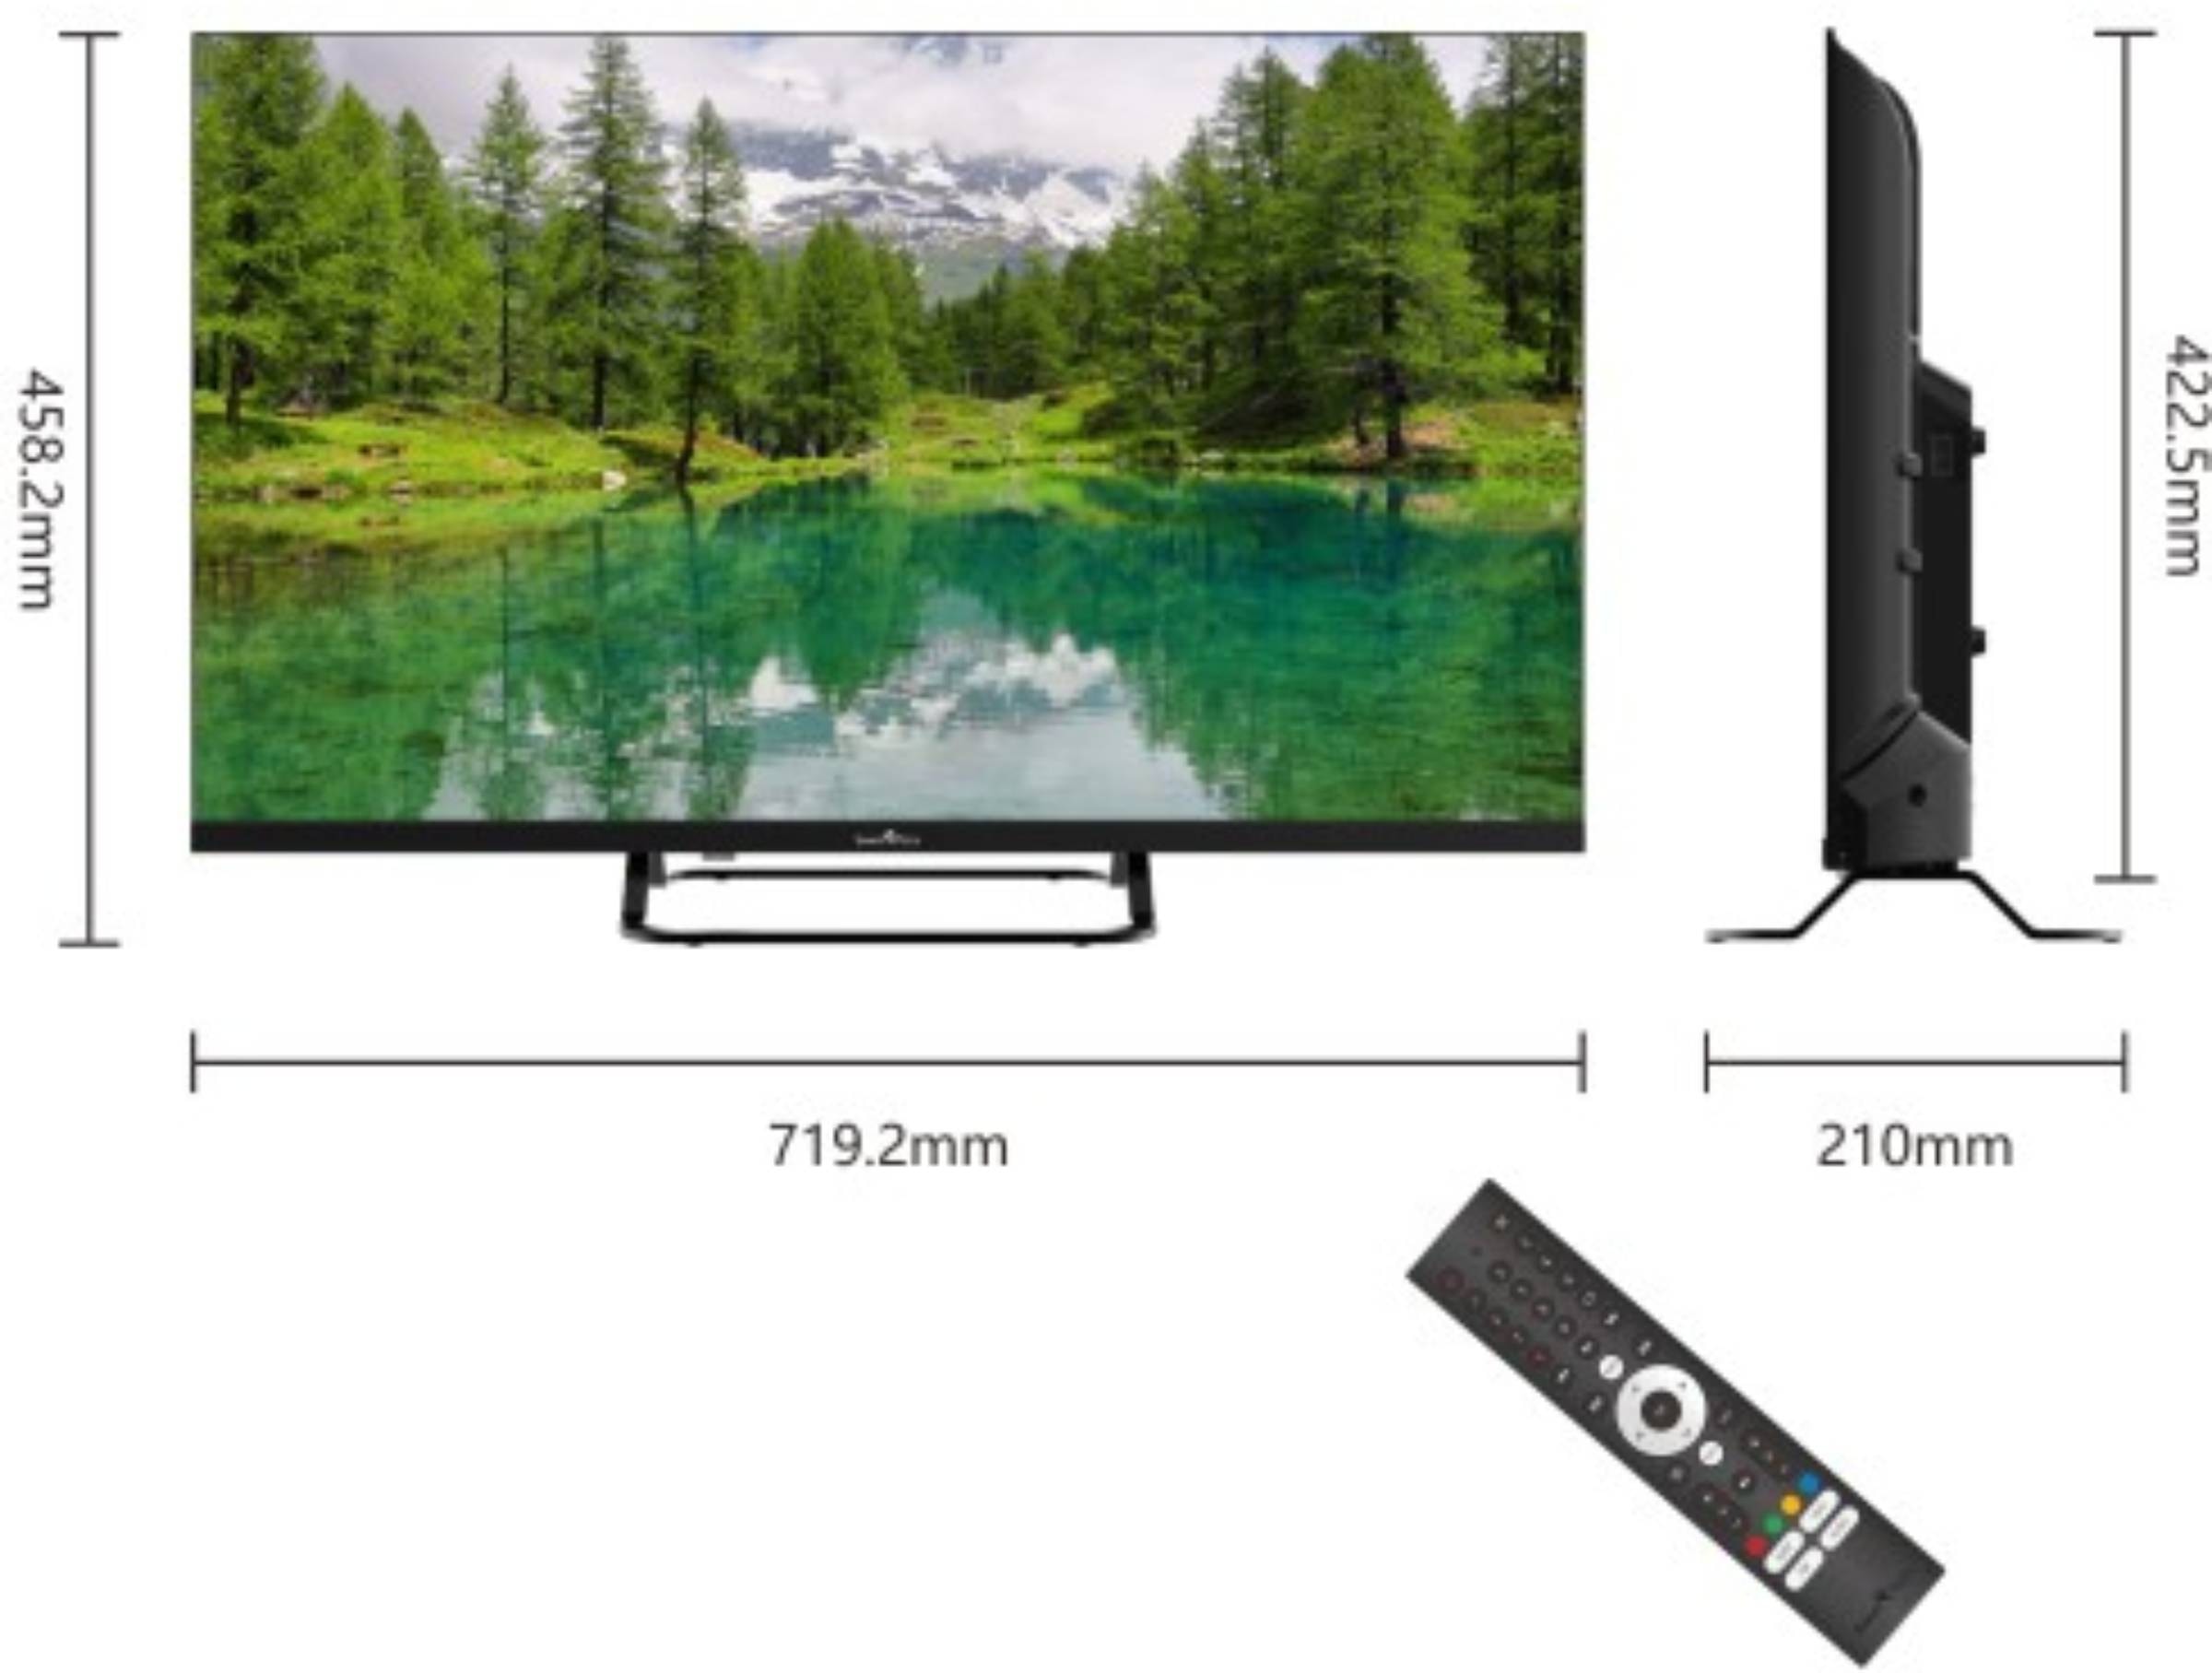 SMART TECH TV LED 81 cm HD Ready 32" - 32HN01V